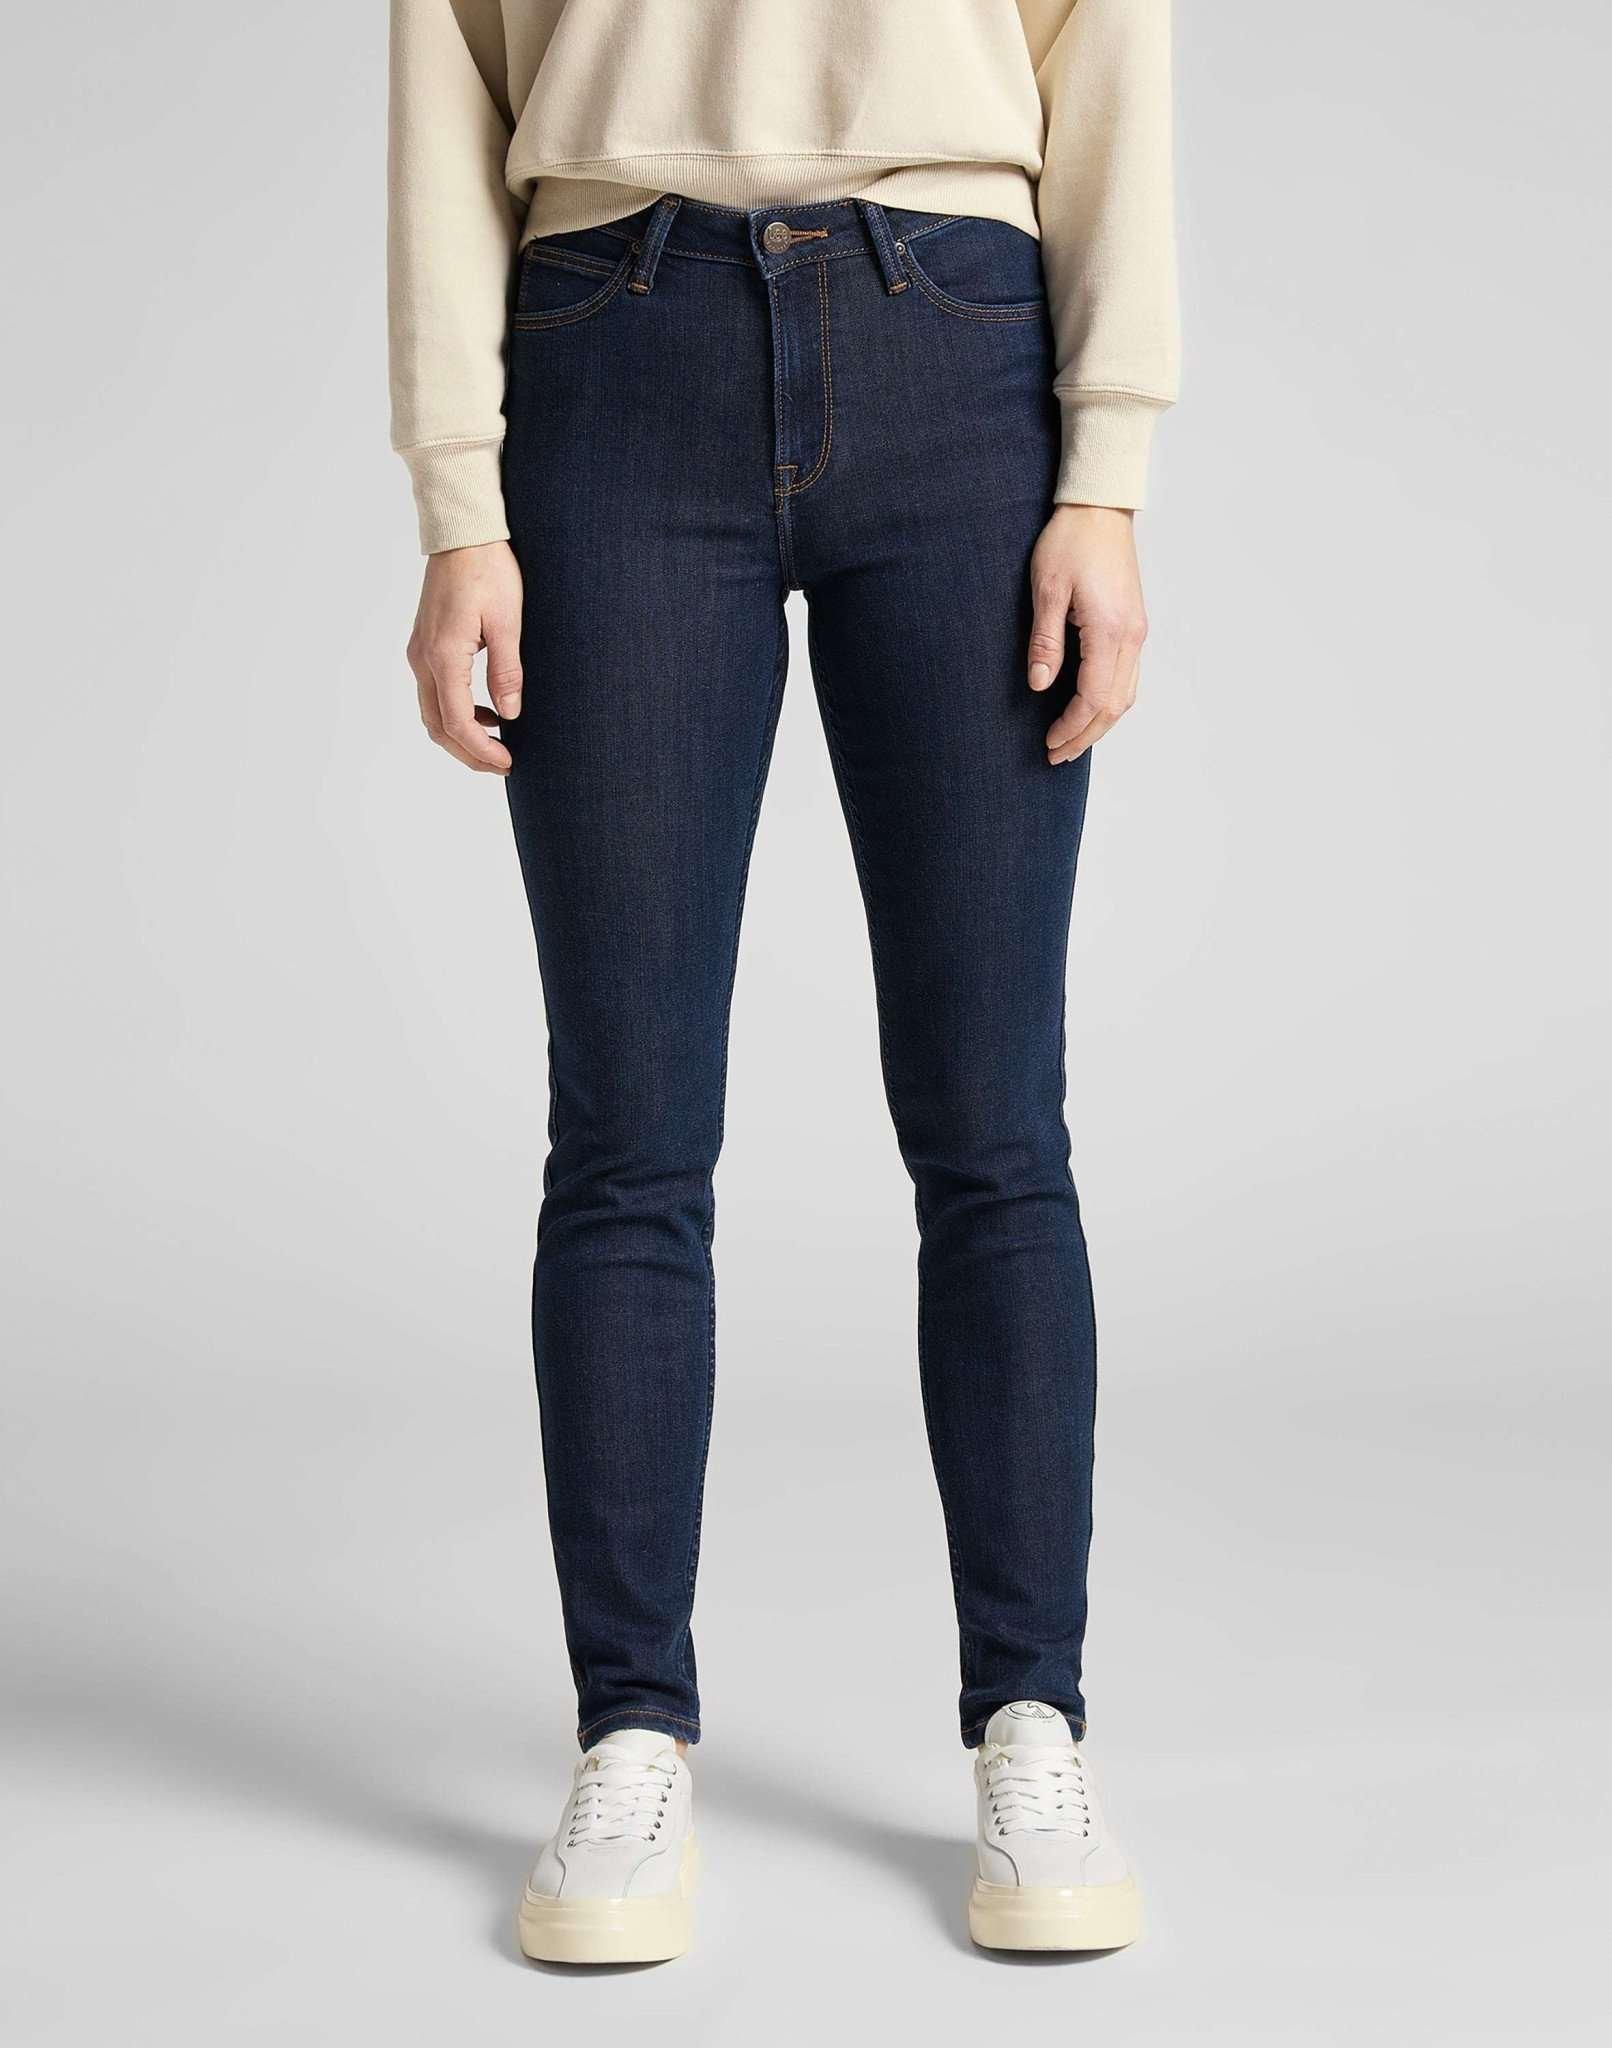 Jeans Skinny Fit Scarlett High Damen Blau Denim L31/W28 von Lee